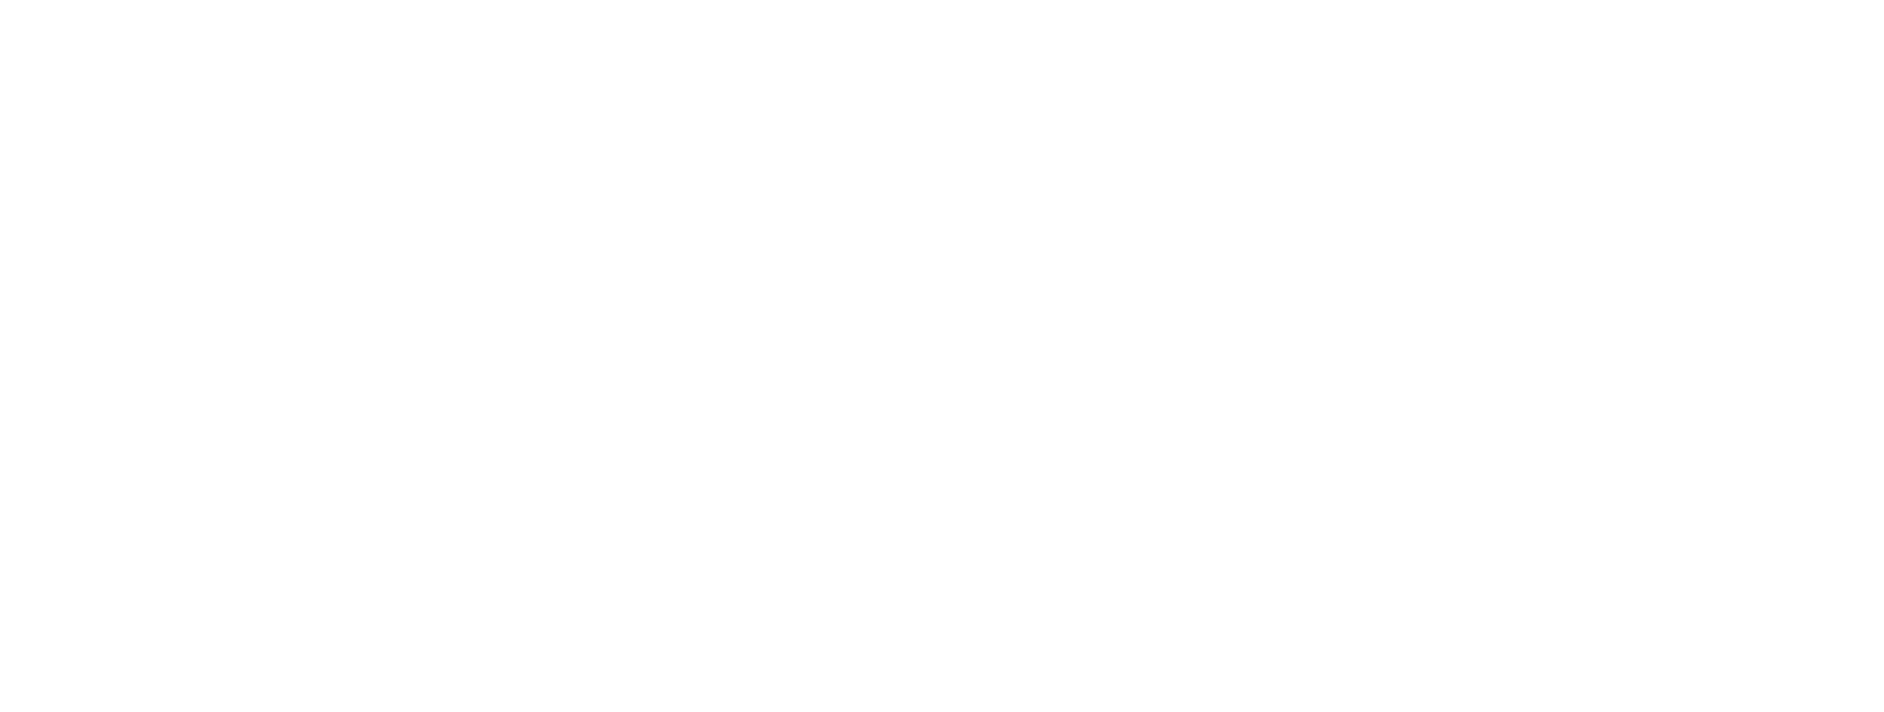 The Architects of Destiny white logo